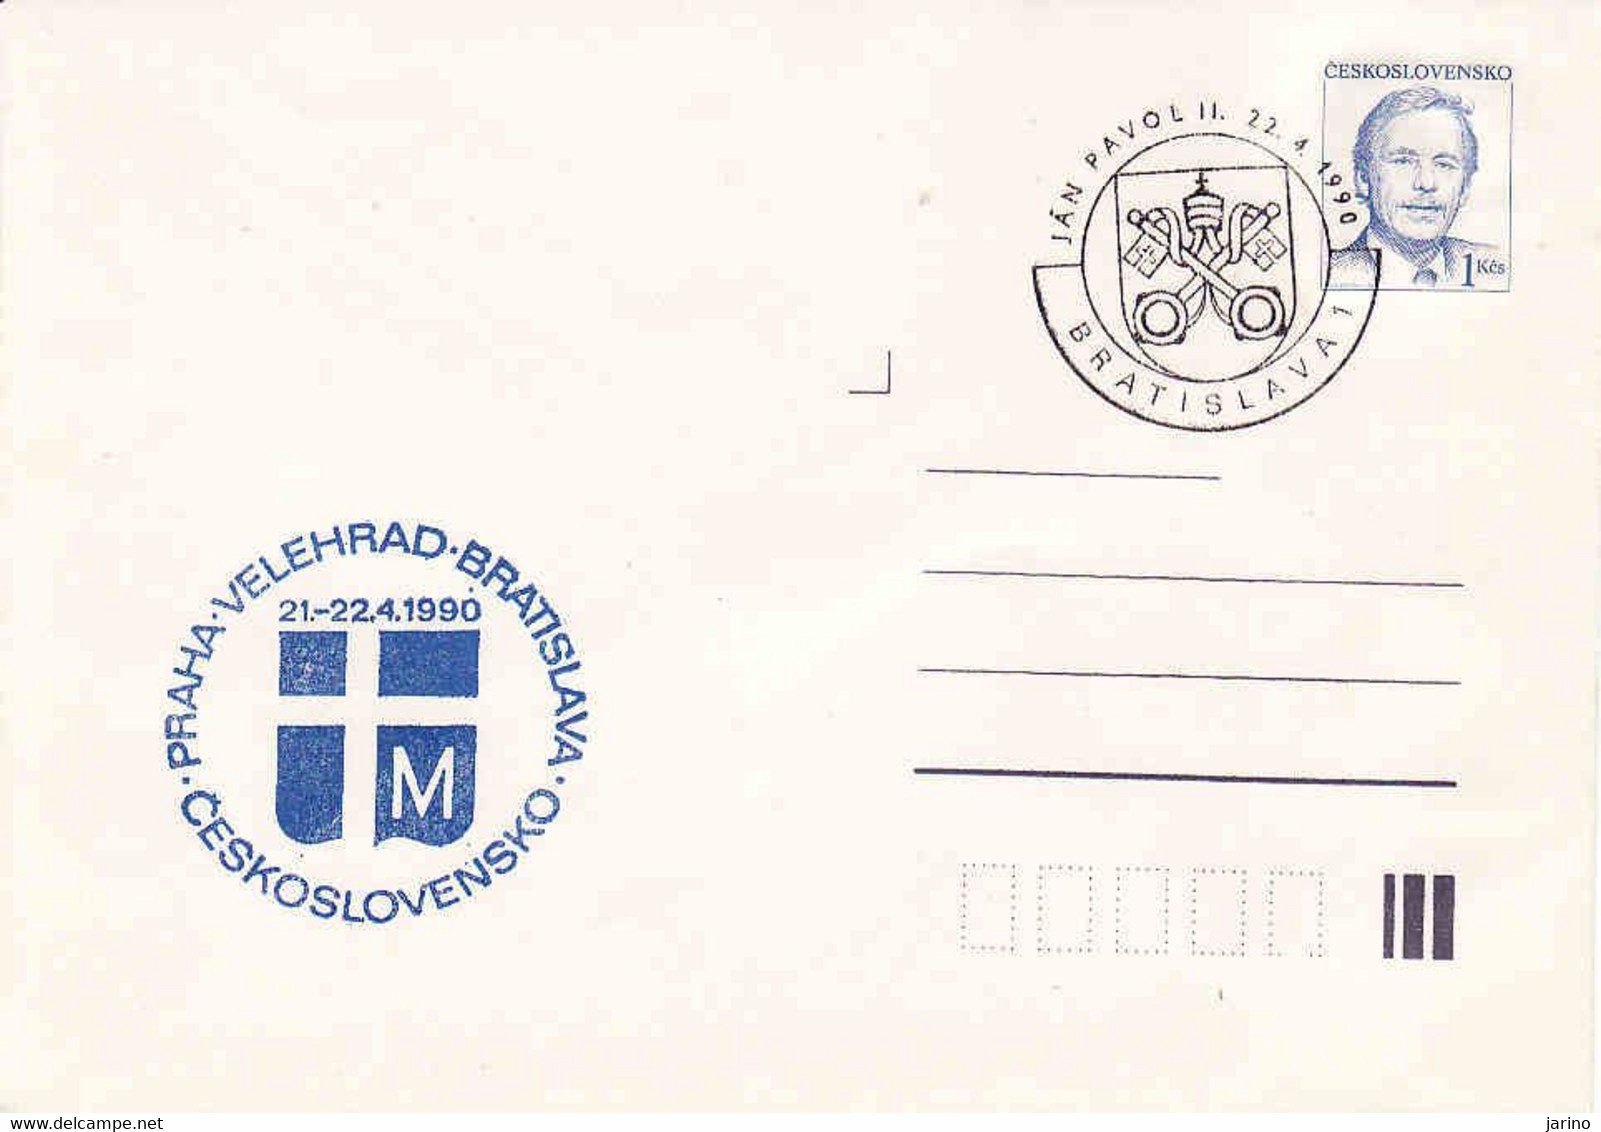 Czechoslovakia 1990, Praha - Velehrad, Bratislava, Visit John Pavul II 21. - 22.4 .1990 - Omslagen